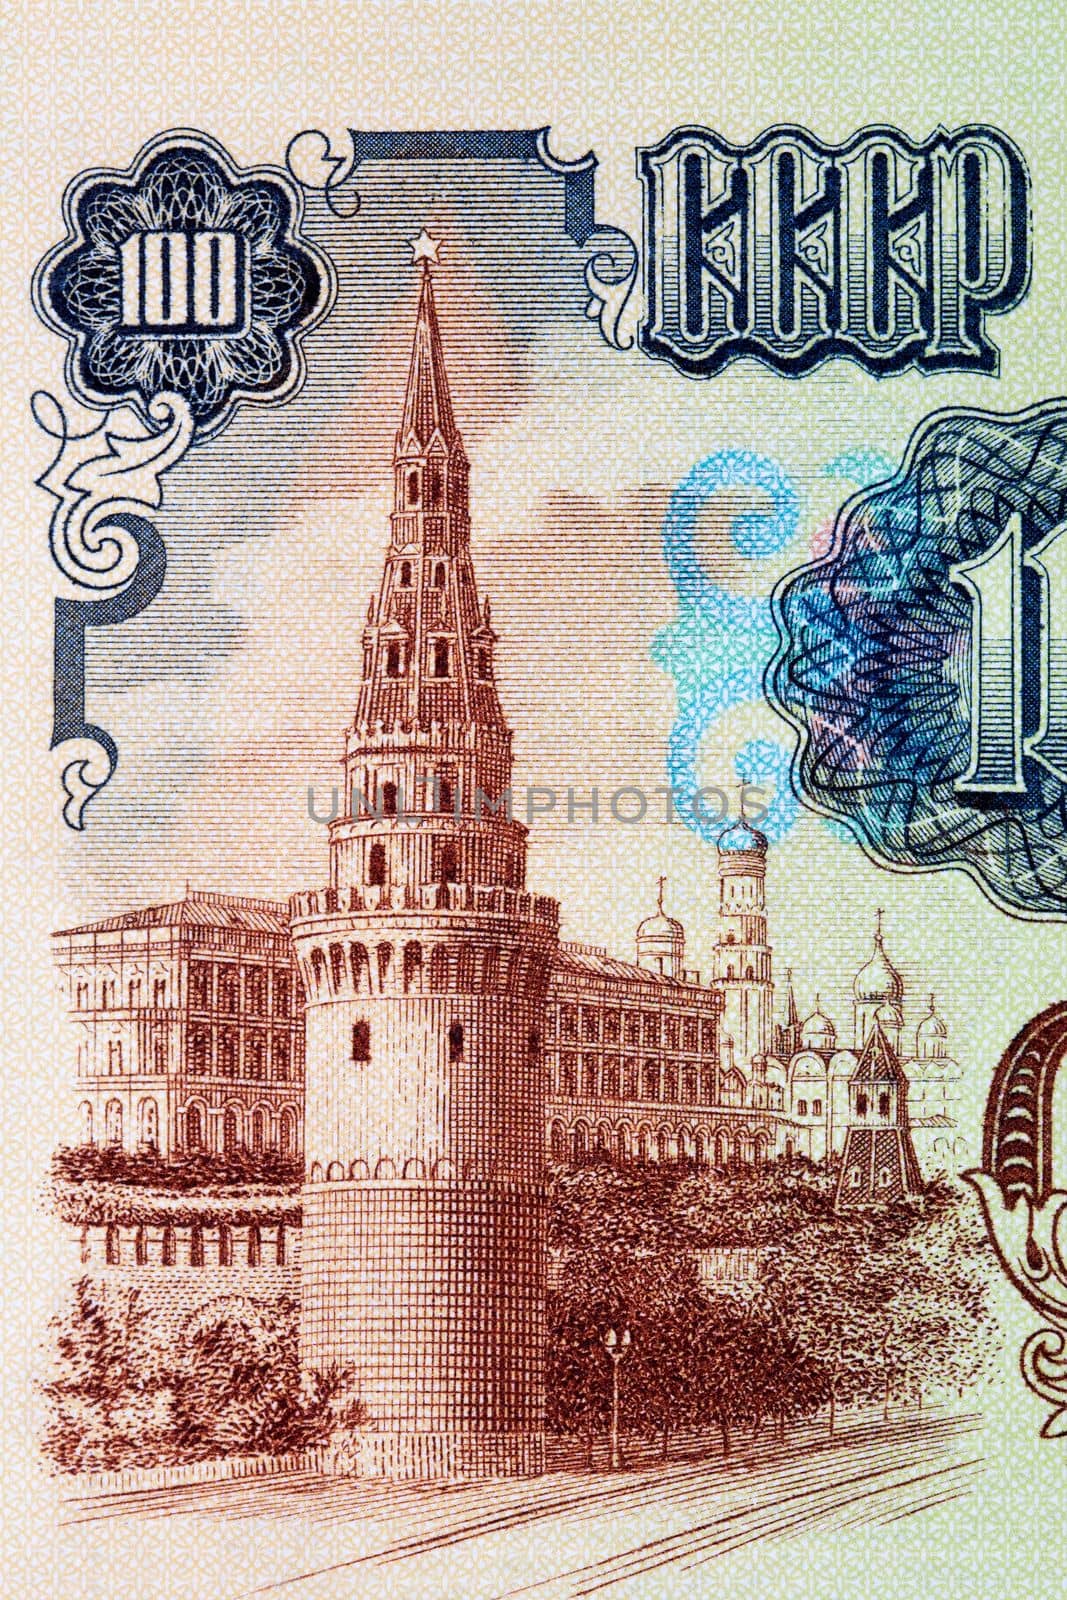 Kremlin Tower from Russian money - ruble